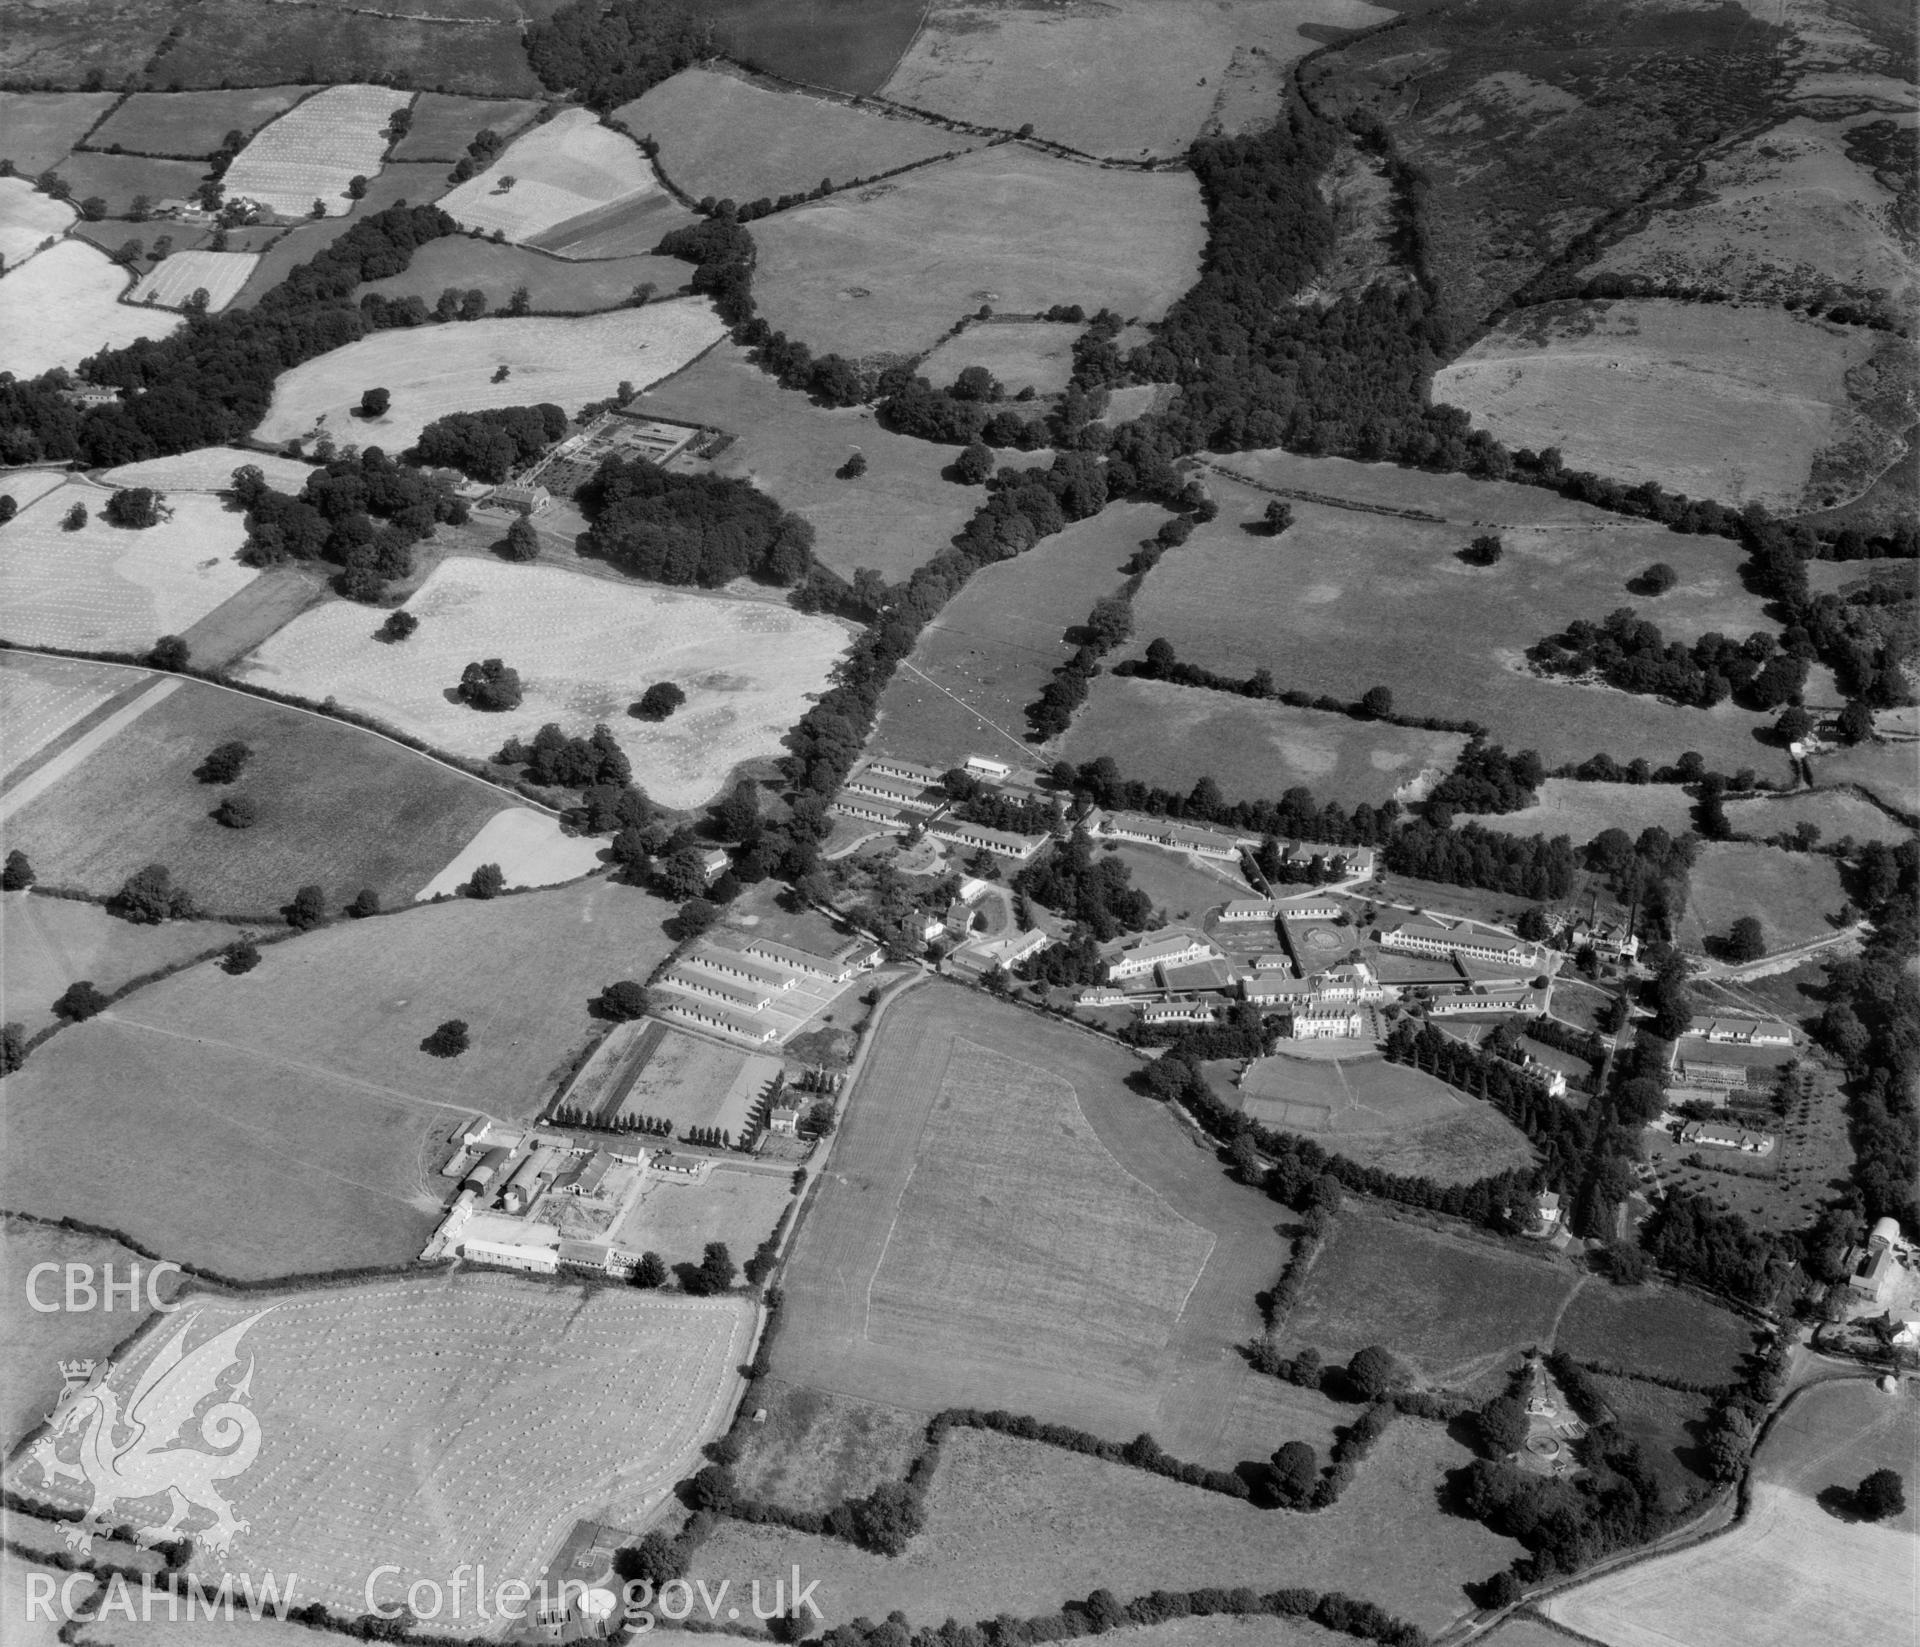 View of King Edward VII Sanitorium, Llangwyfan